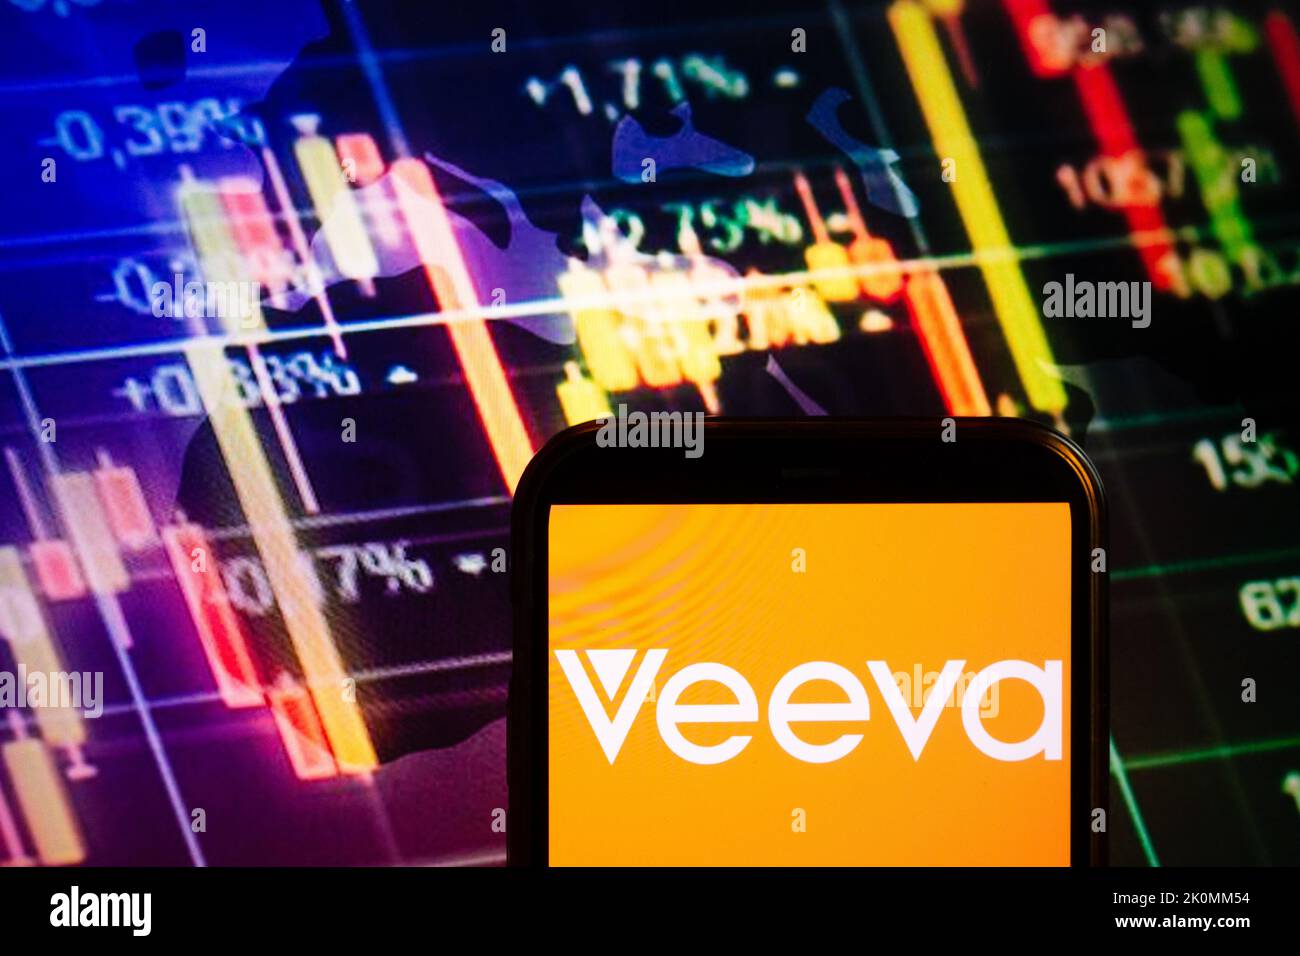 KONSKIE, POLAND - September 10, 2022: Smartphone displaying logo of Veeva Systems company on stock exchange diagram background Stock Photo